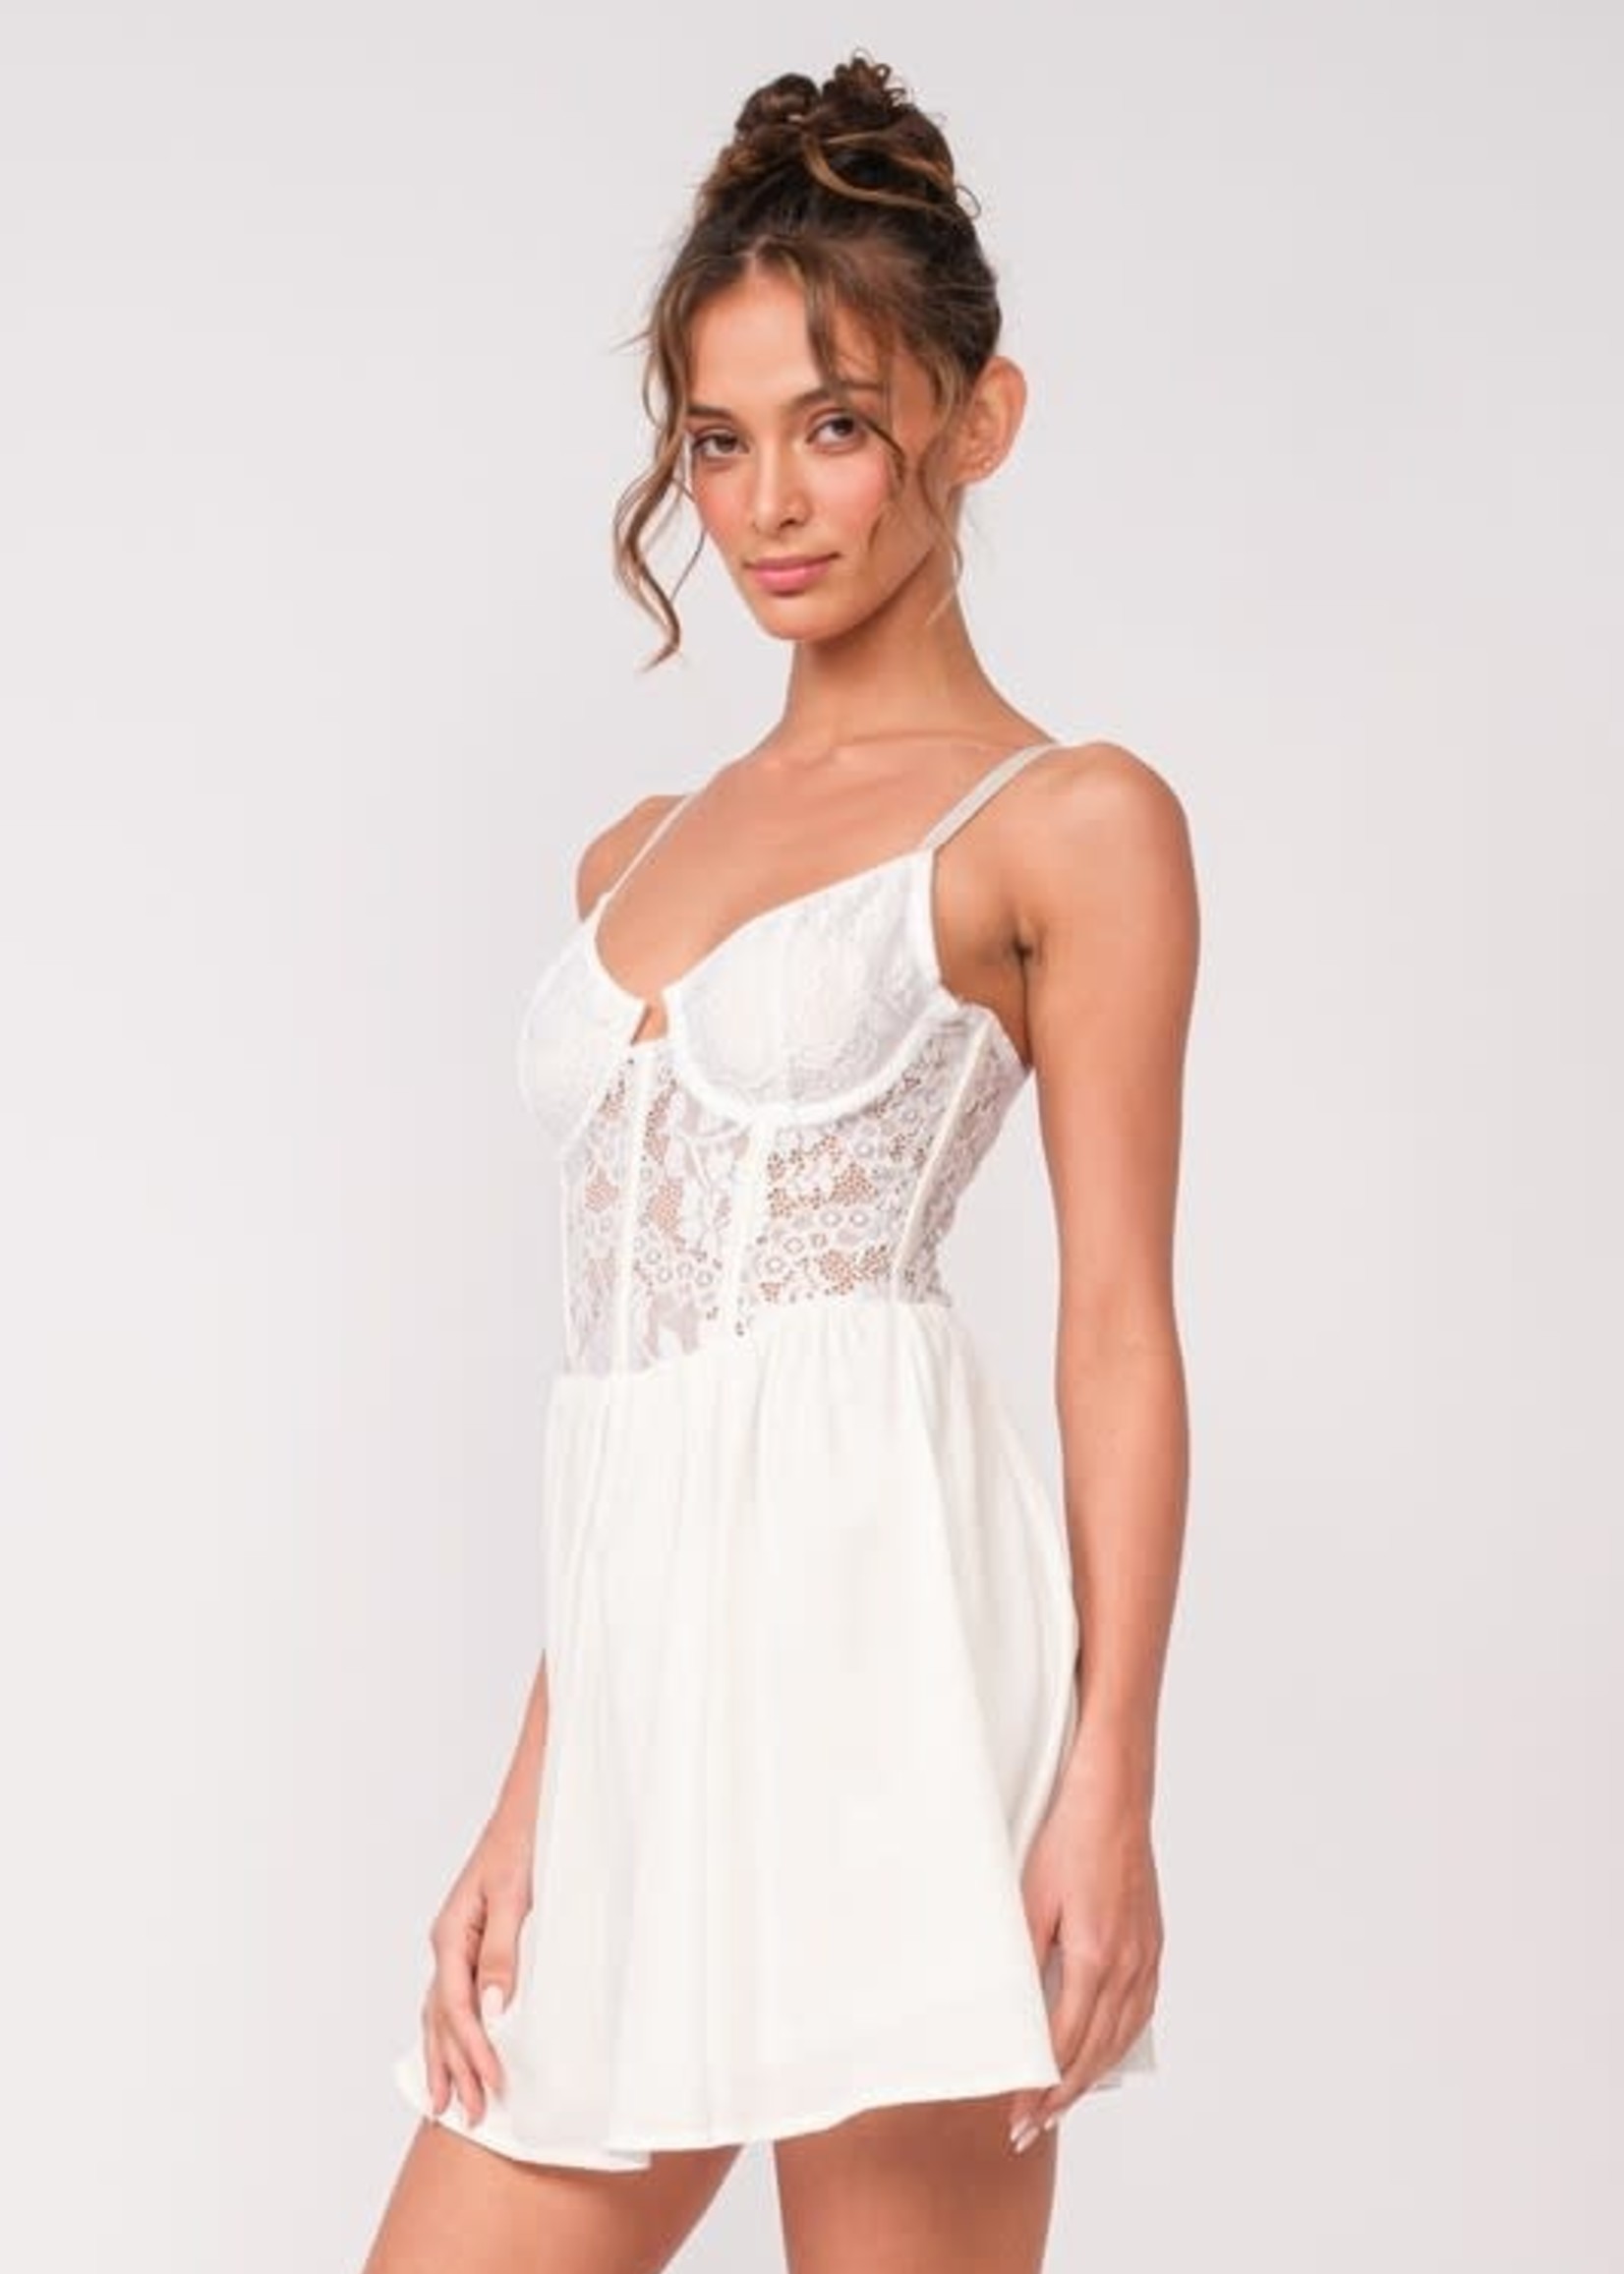 Lace and Pretty White Corset Dress